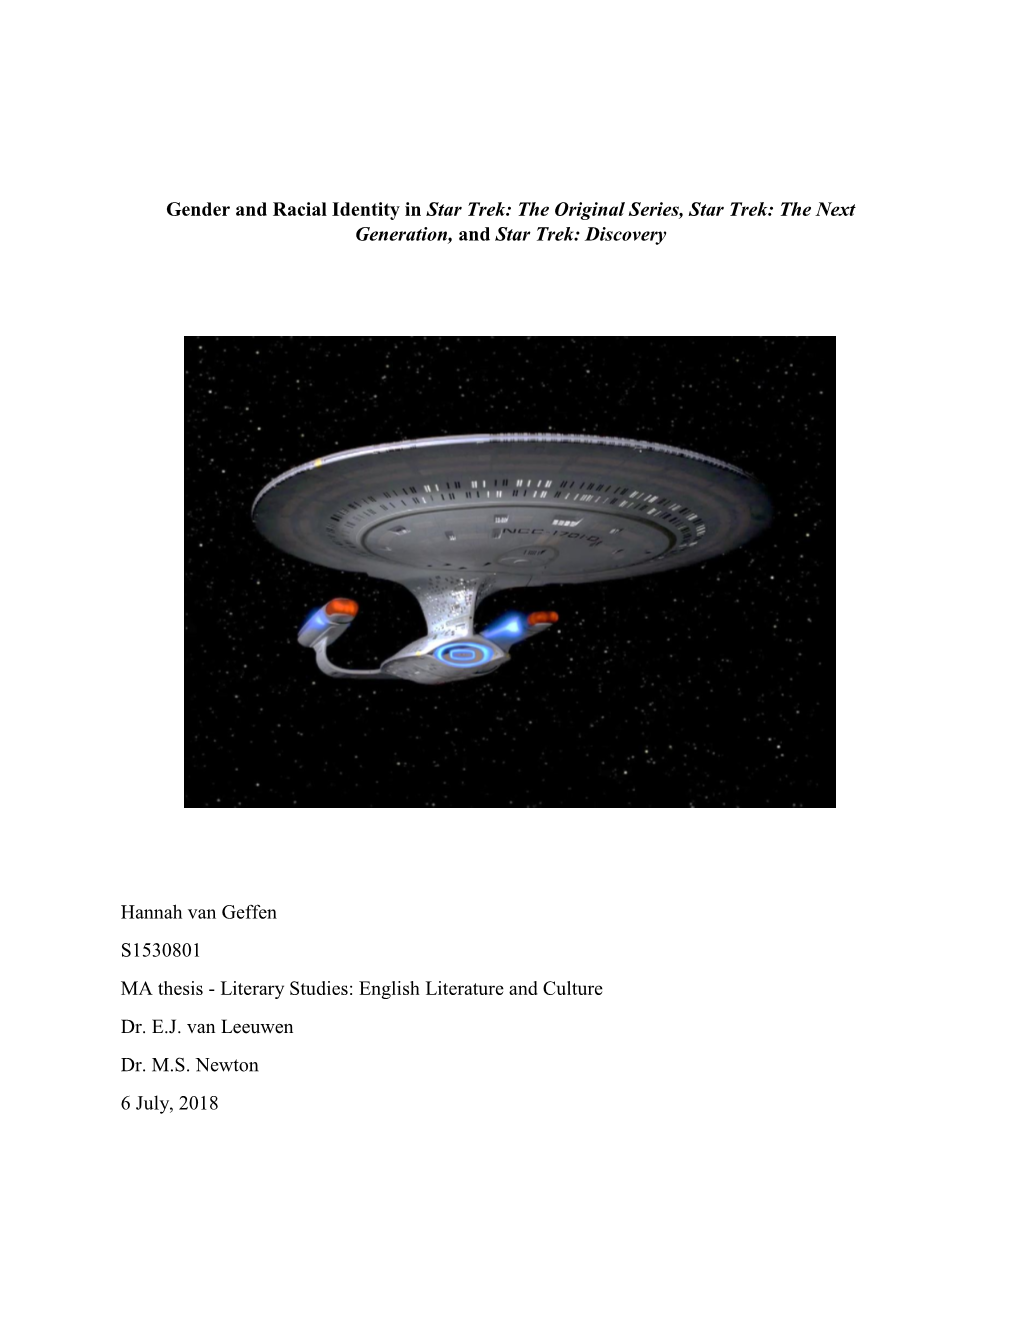 The Original Series, Star Trek: the Next Generation, and Star Trek: Discovery